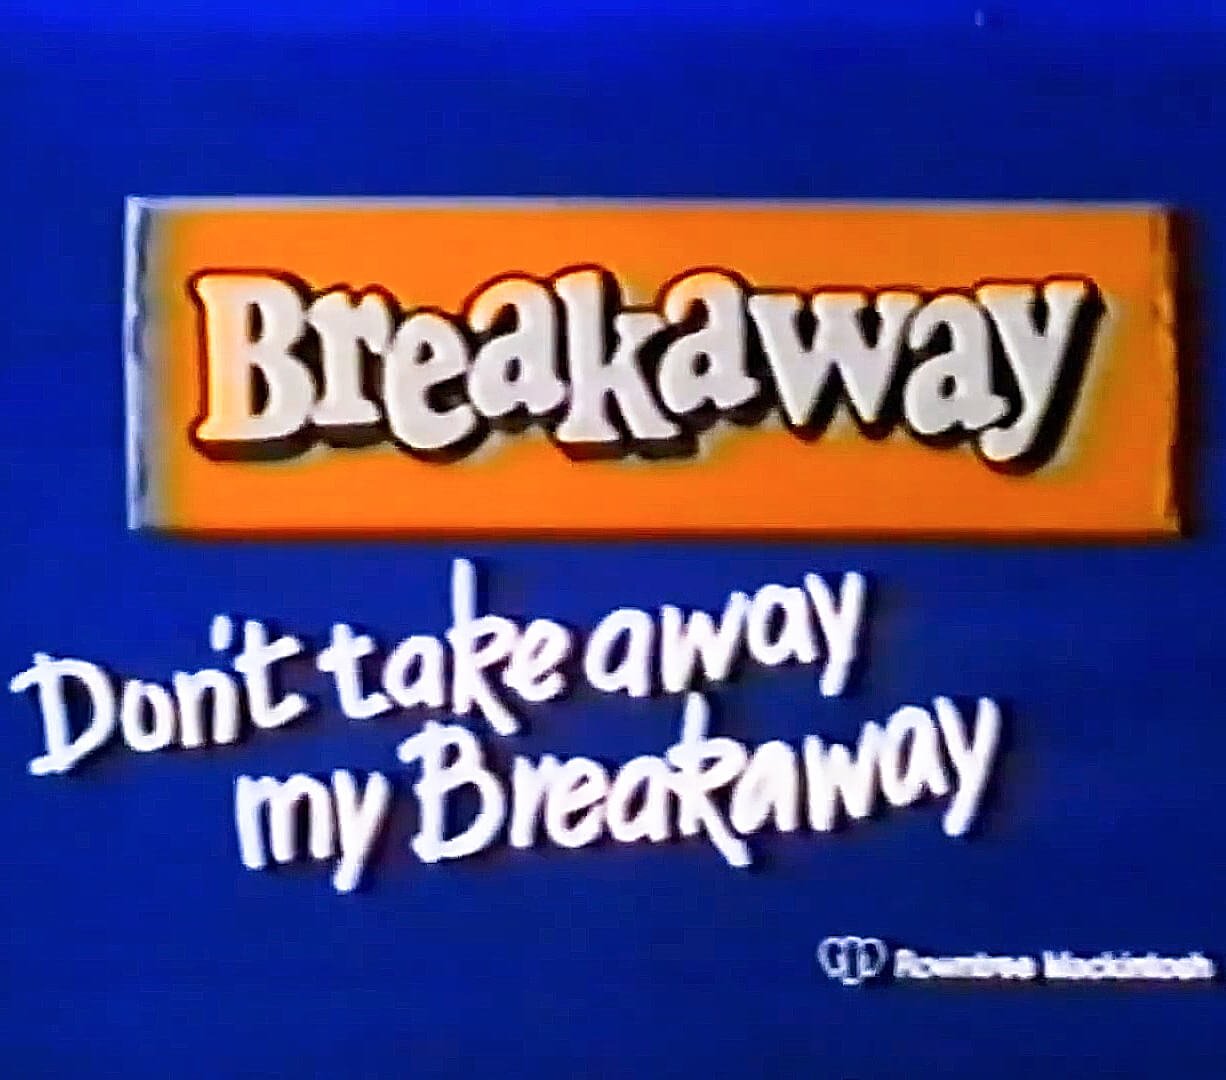 Don't take away my Breakaway advert from 1983